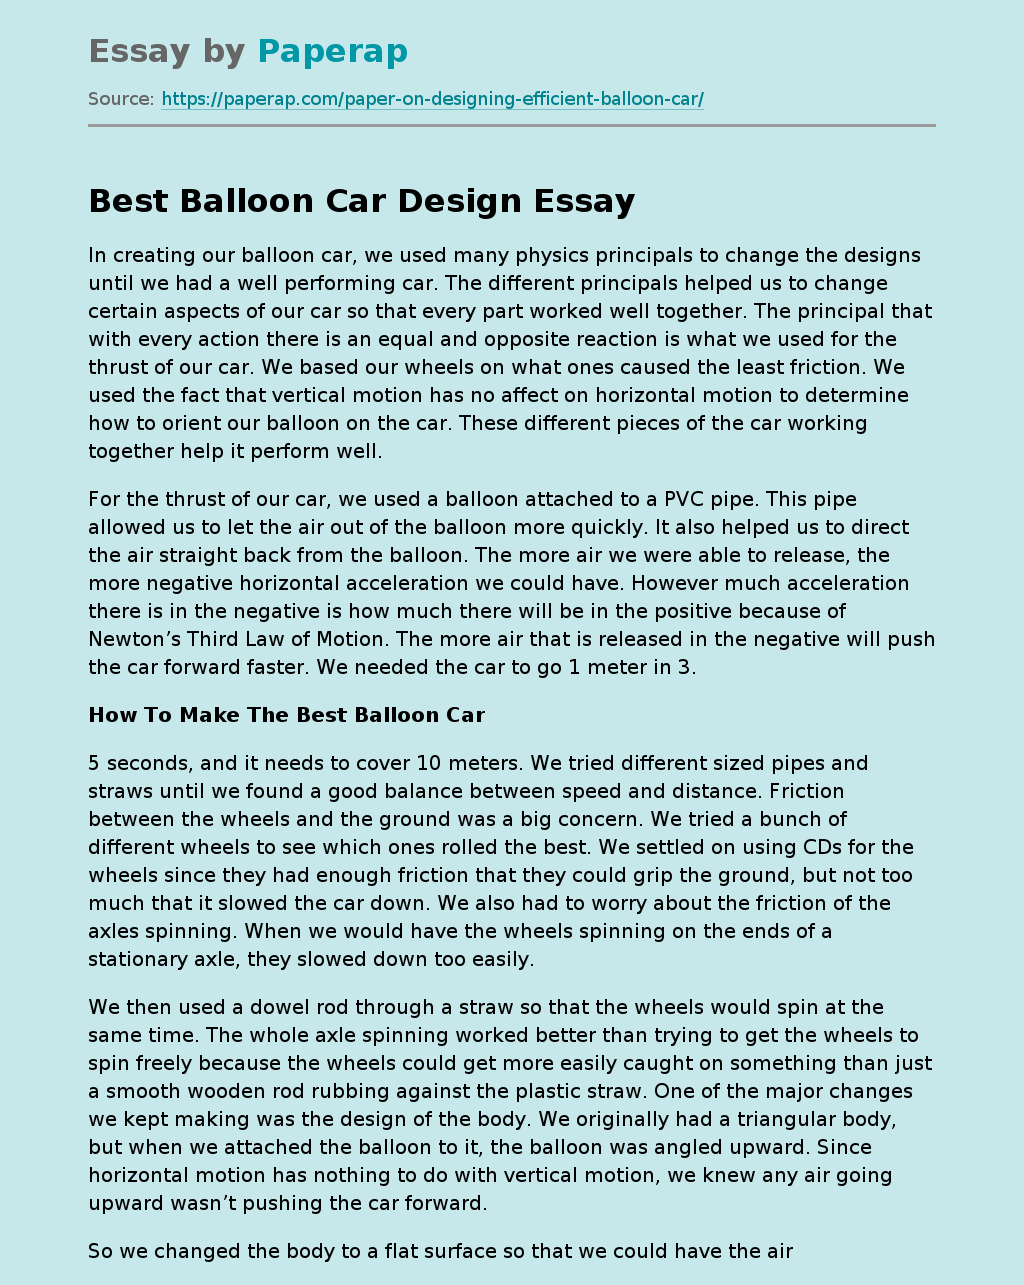 Best Balloon Car Design